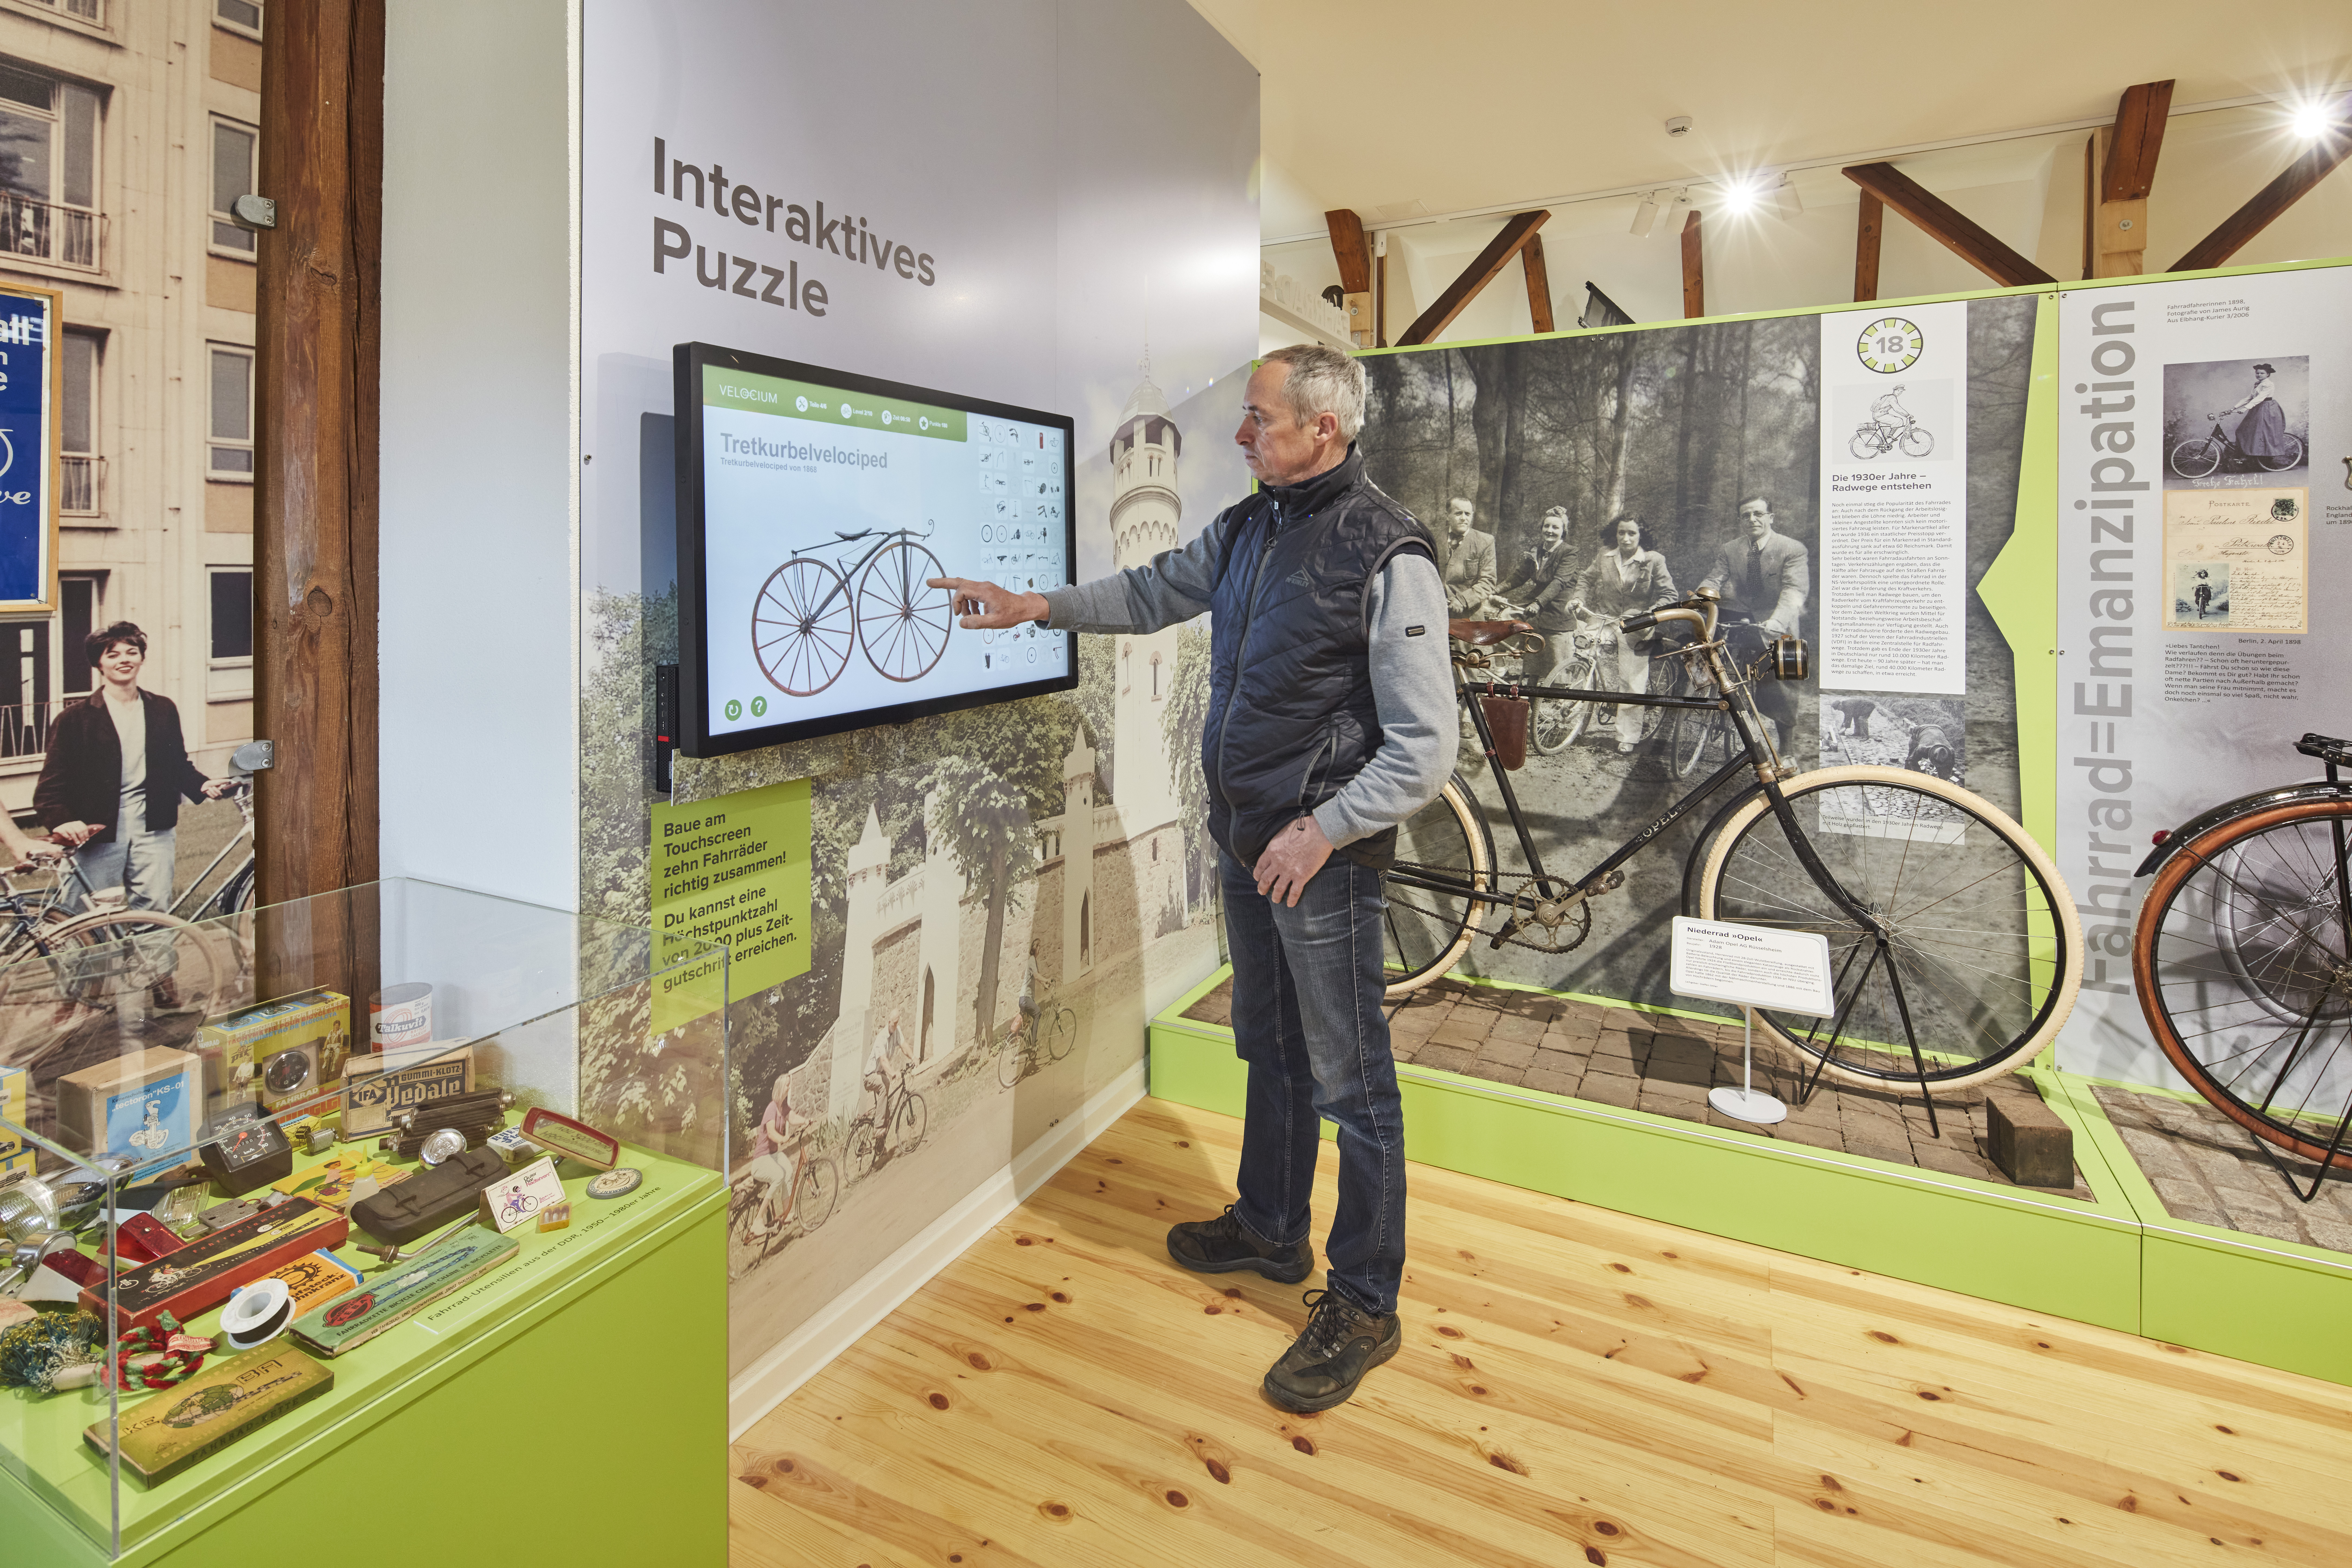 Interaktives Fahrradpuzzle mit Touchscreen